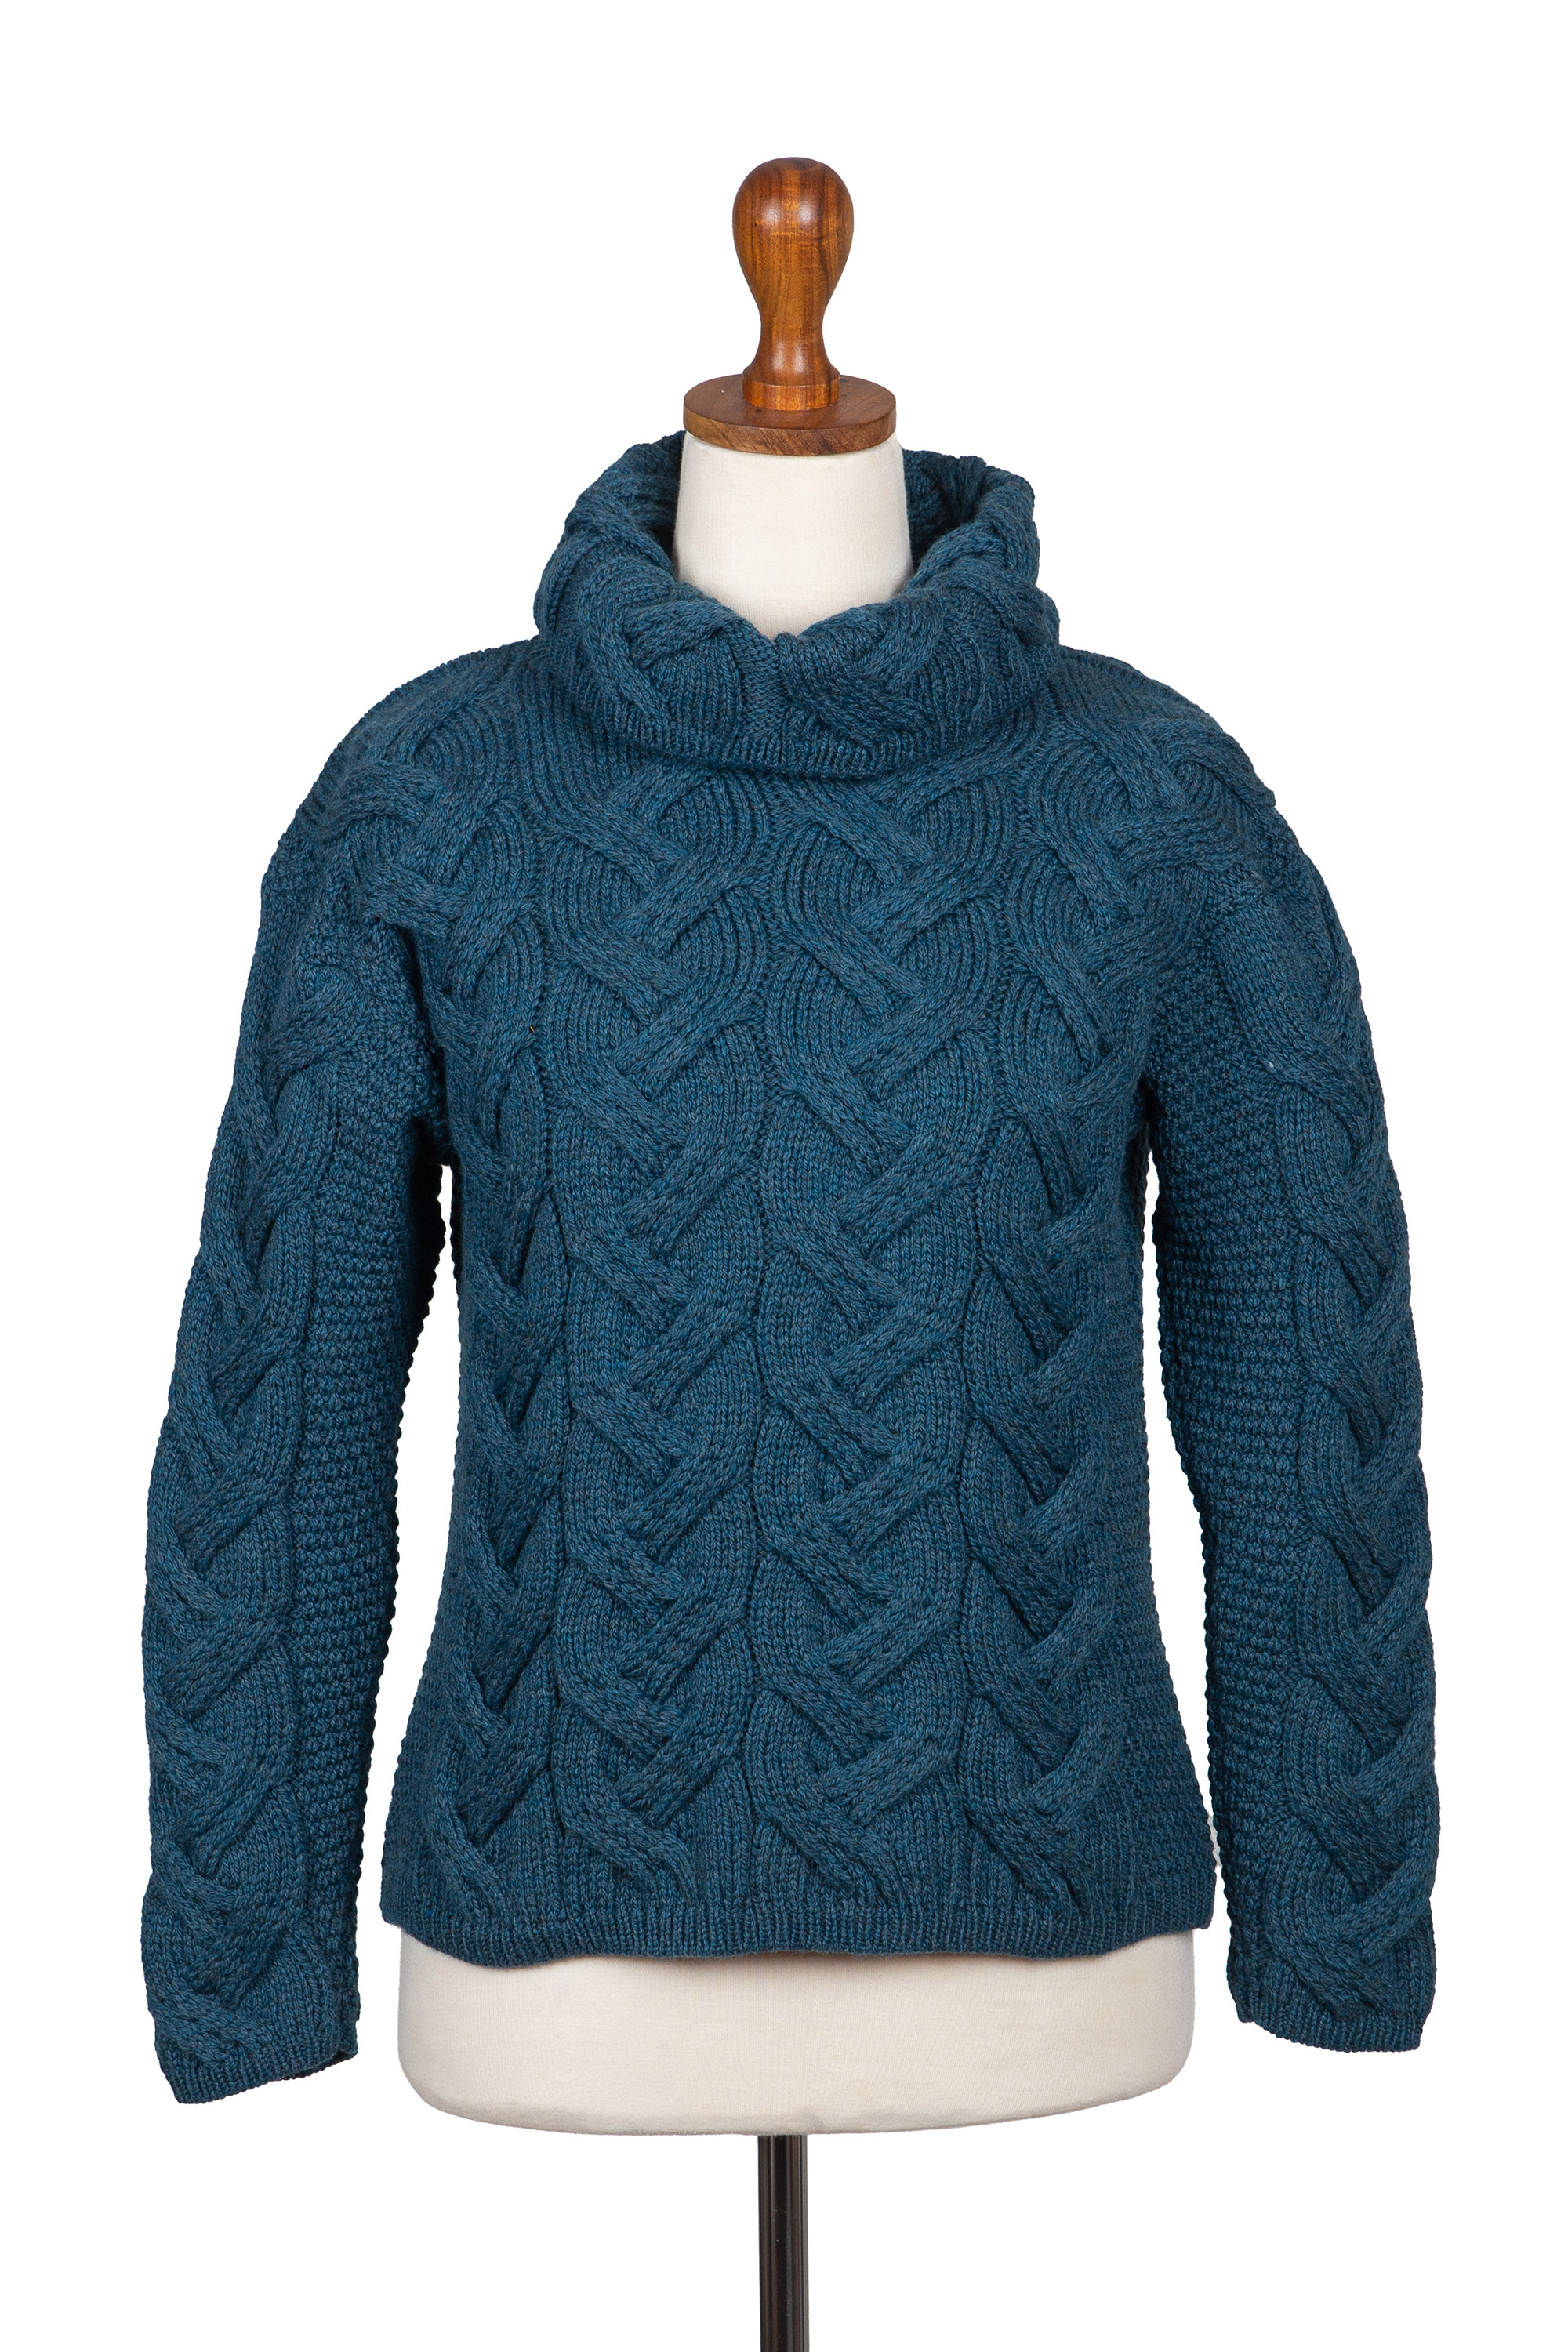 Merino Wool Cowl Neck Sweater Made in Ireland - Broadhaven | NOVICA